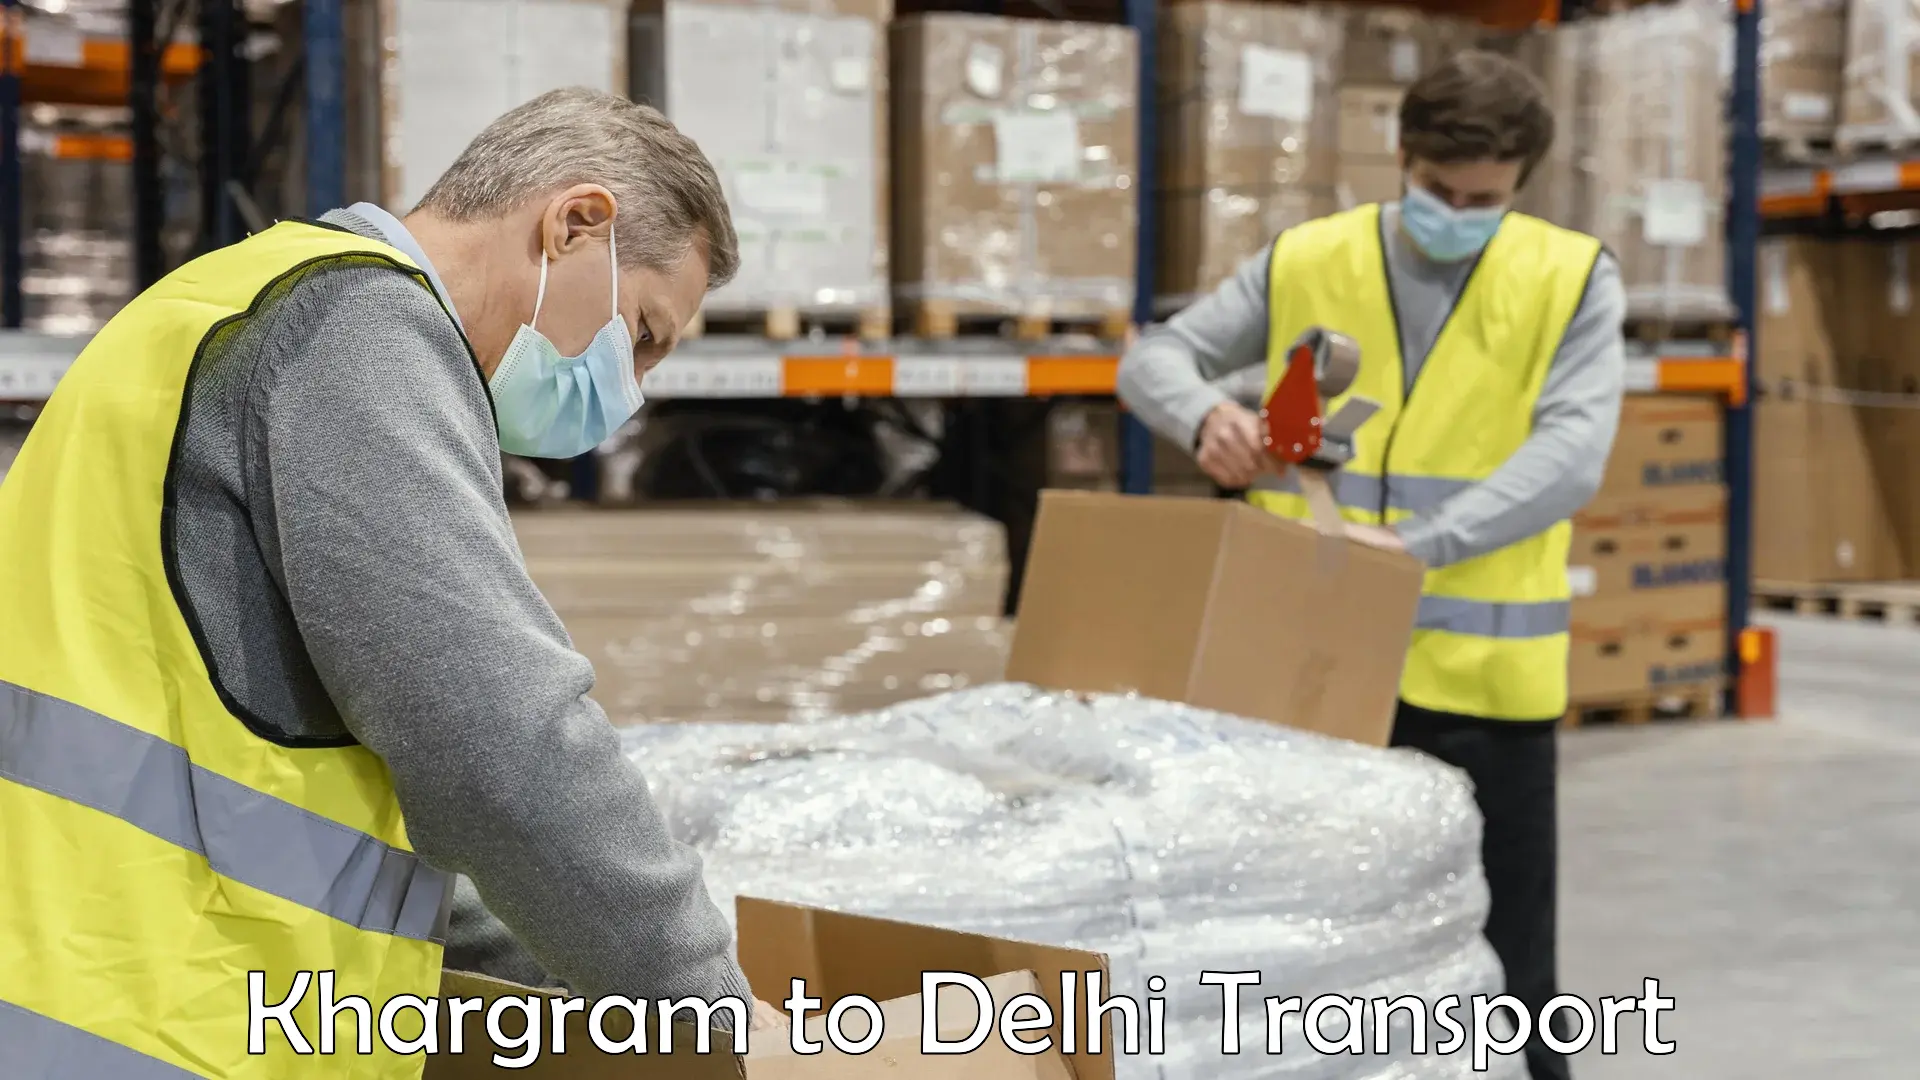 Goods delivery service Khargram to East Delhi